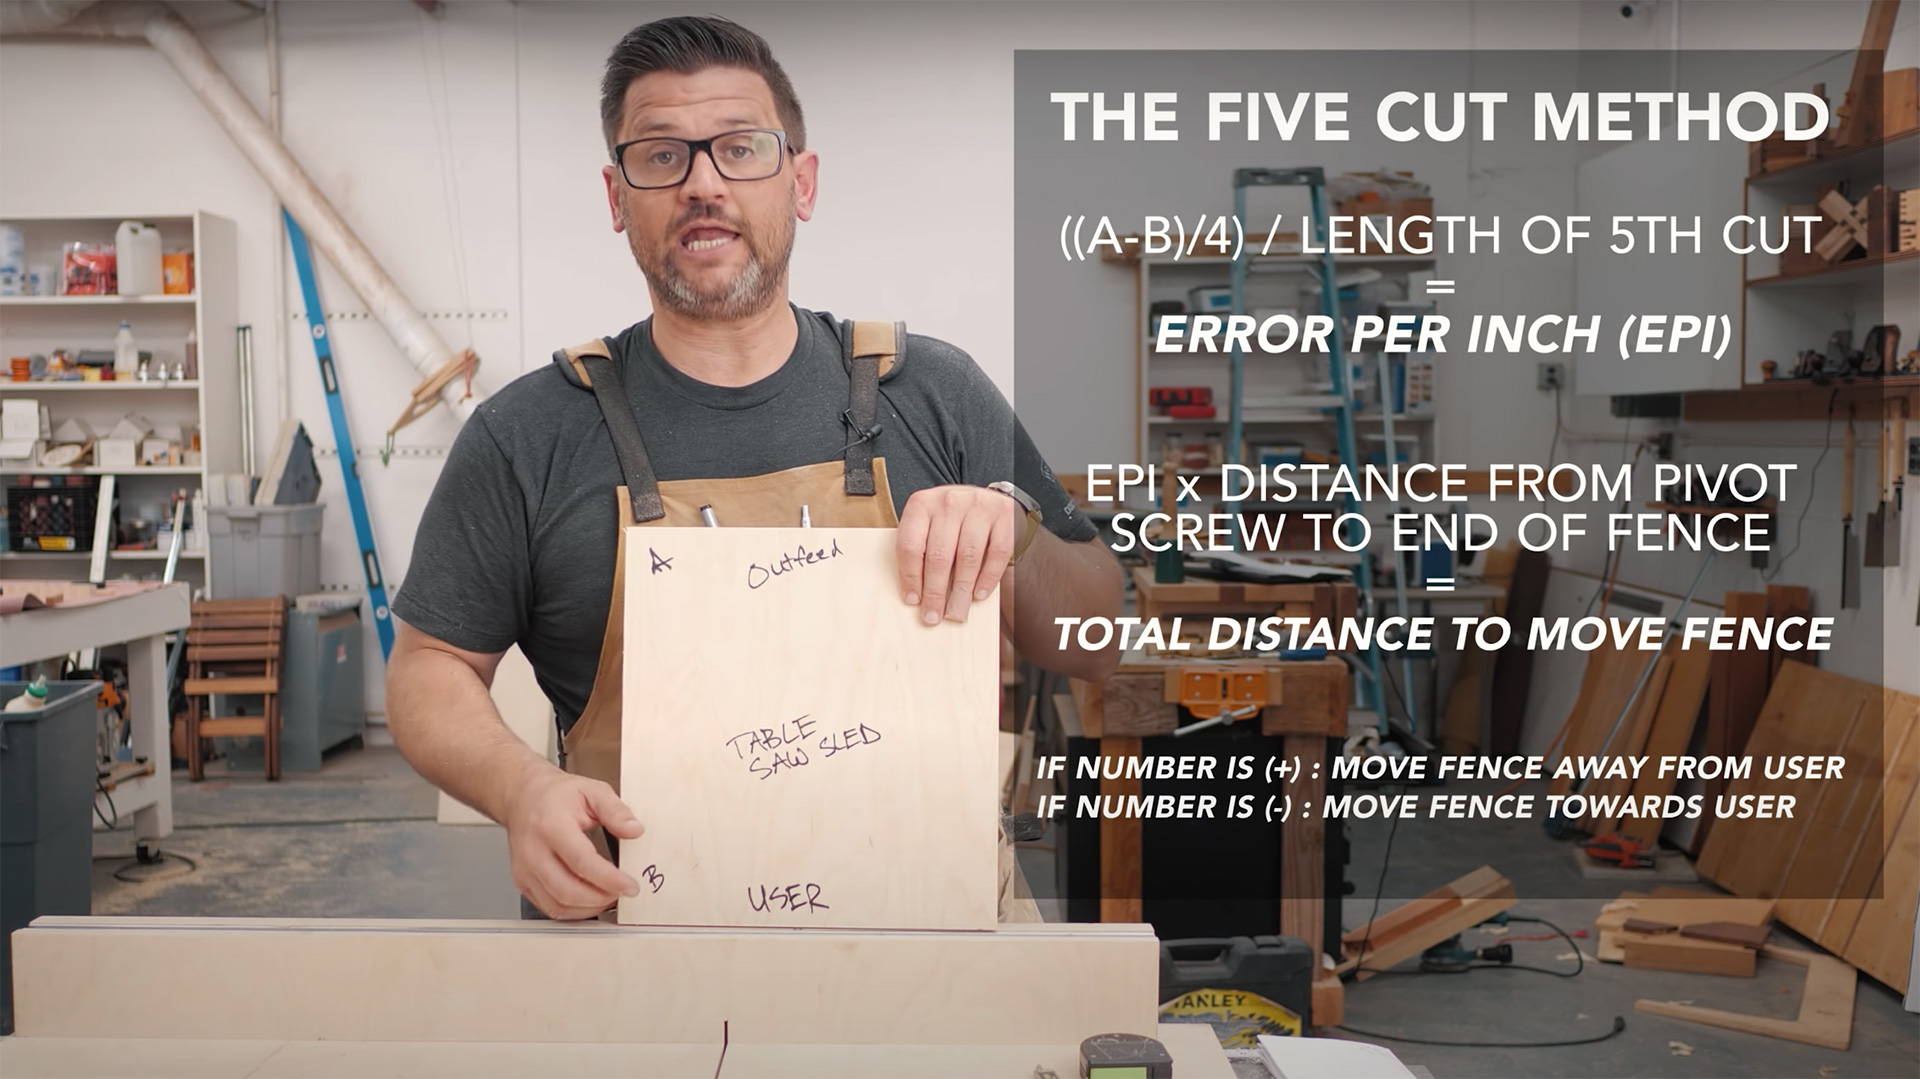 The five cut method